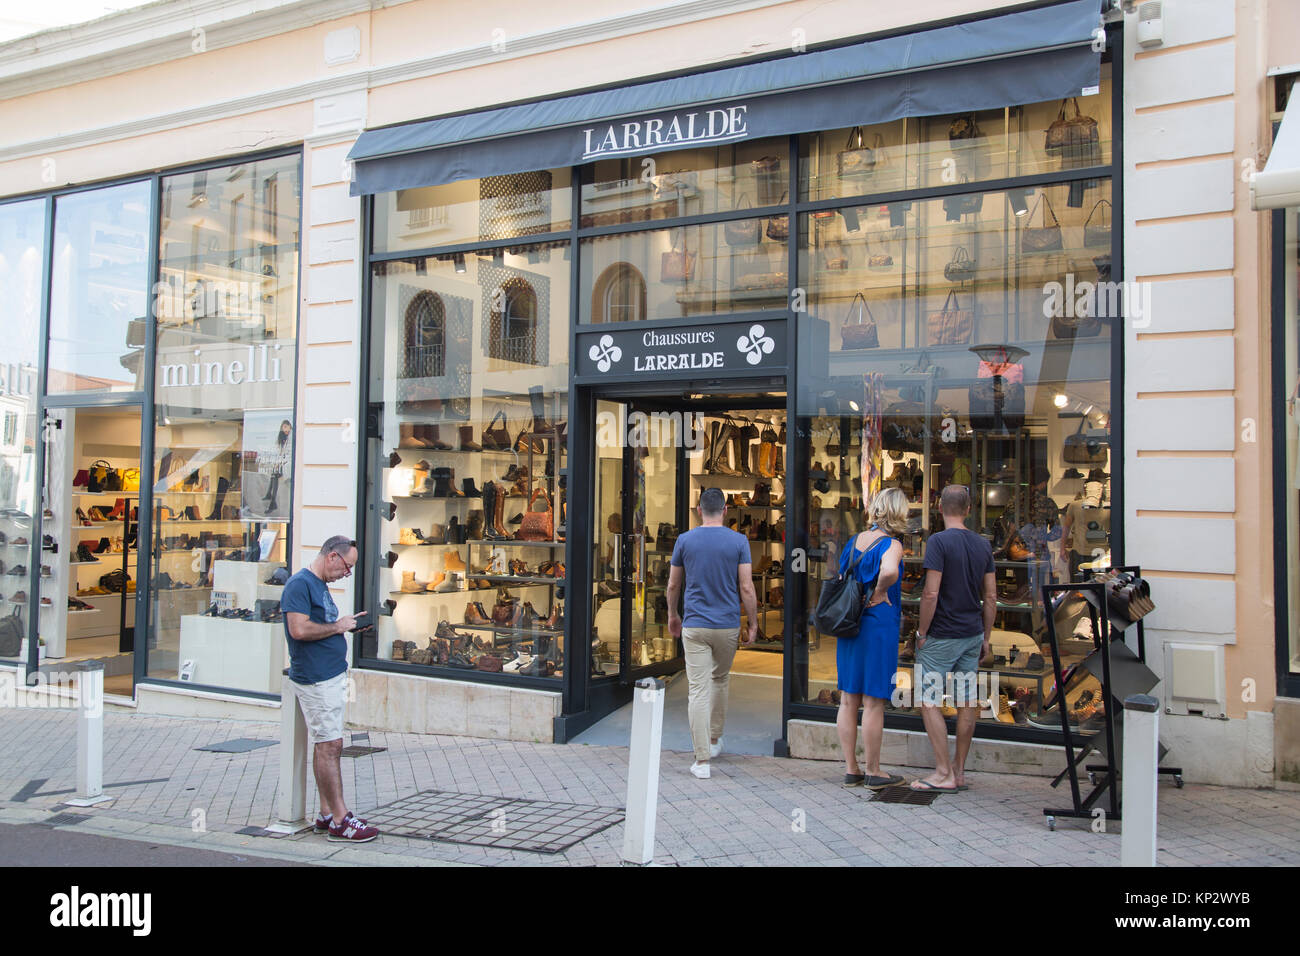 Larralde Shoe Shop, Biarritz, Basque Country, France Stock Photo - Alamy